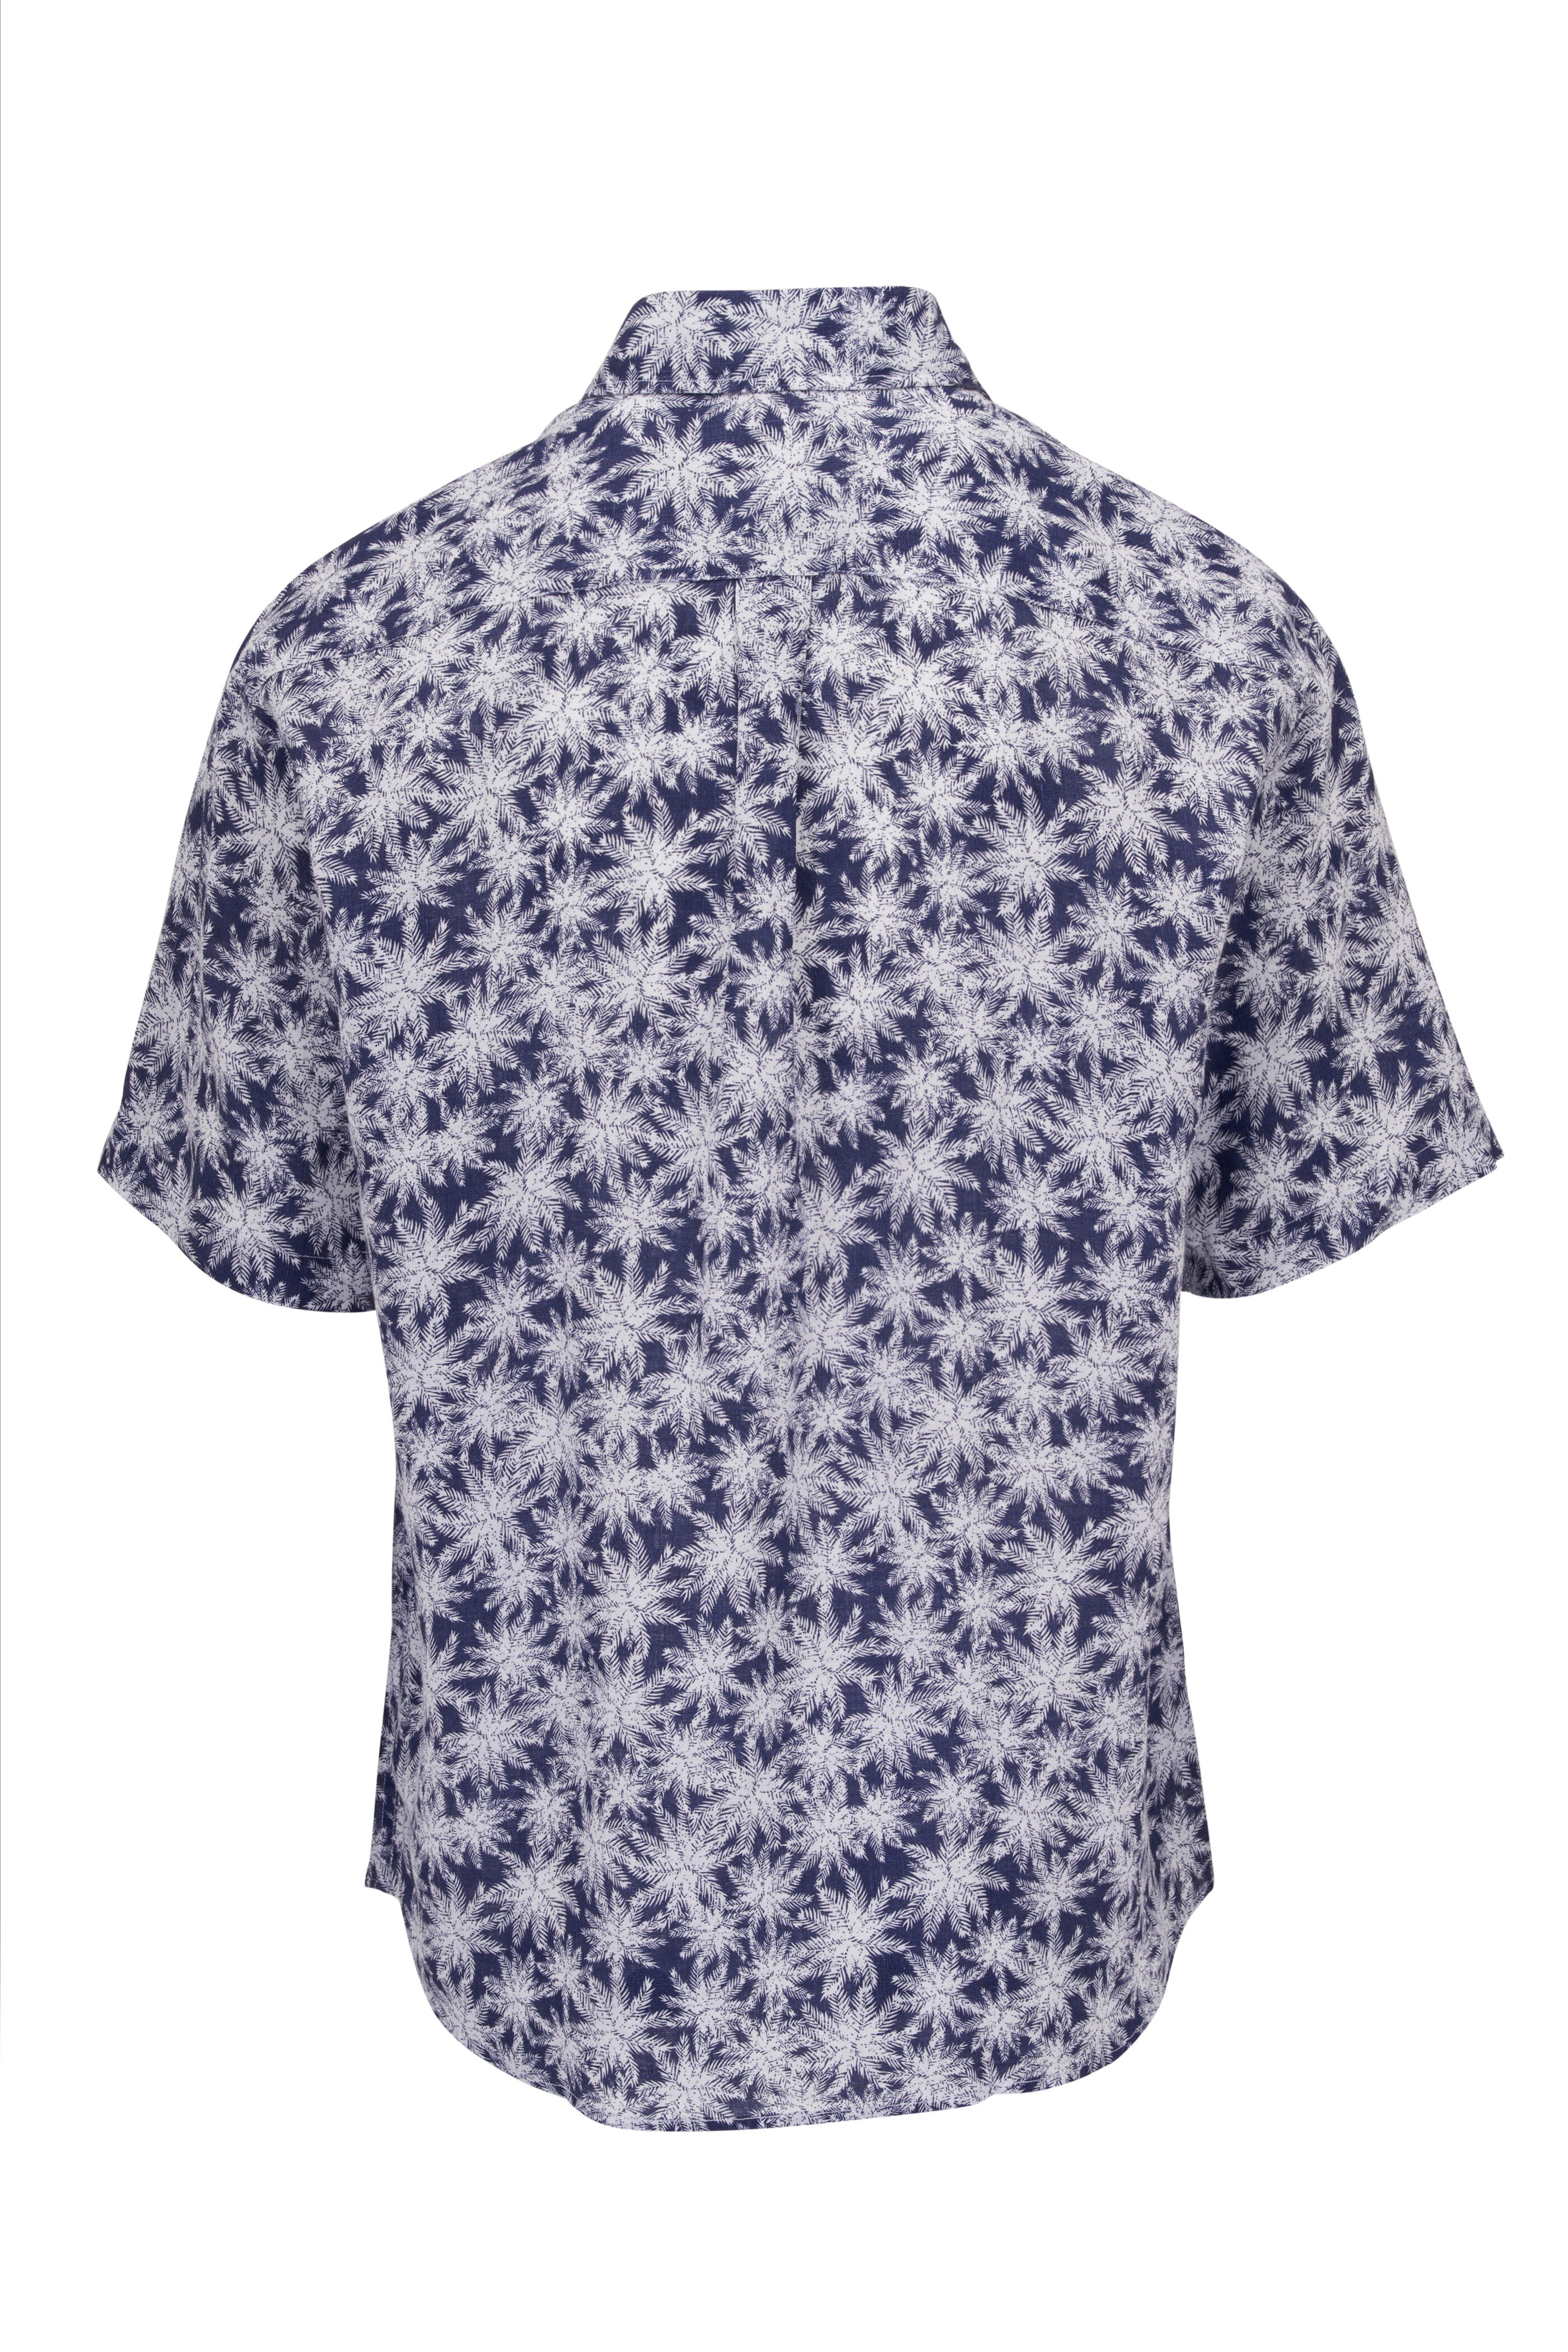 Peter Millar - Key Cove Atlantic Blue Linen Sport Shirt